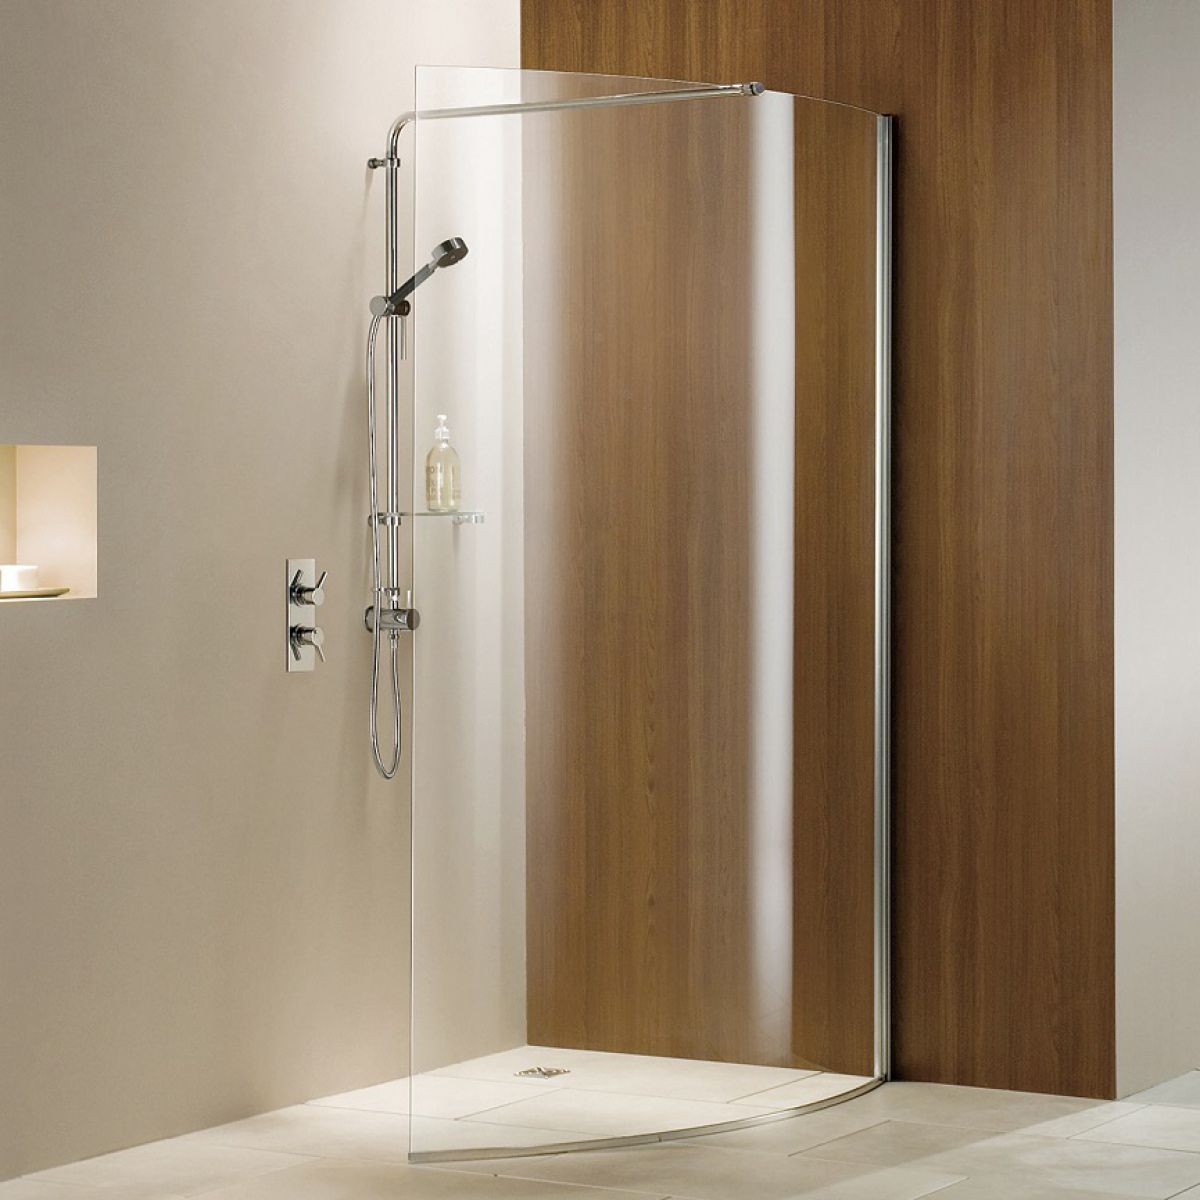 Matki Curved Wet Room Shower Panel Uk Bathrooms regarding size 1200 X 1200